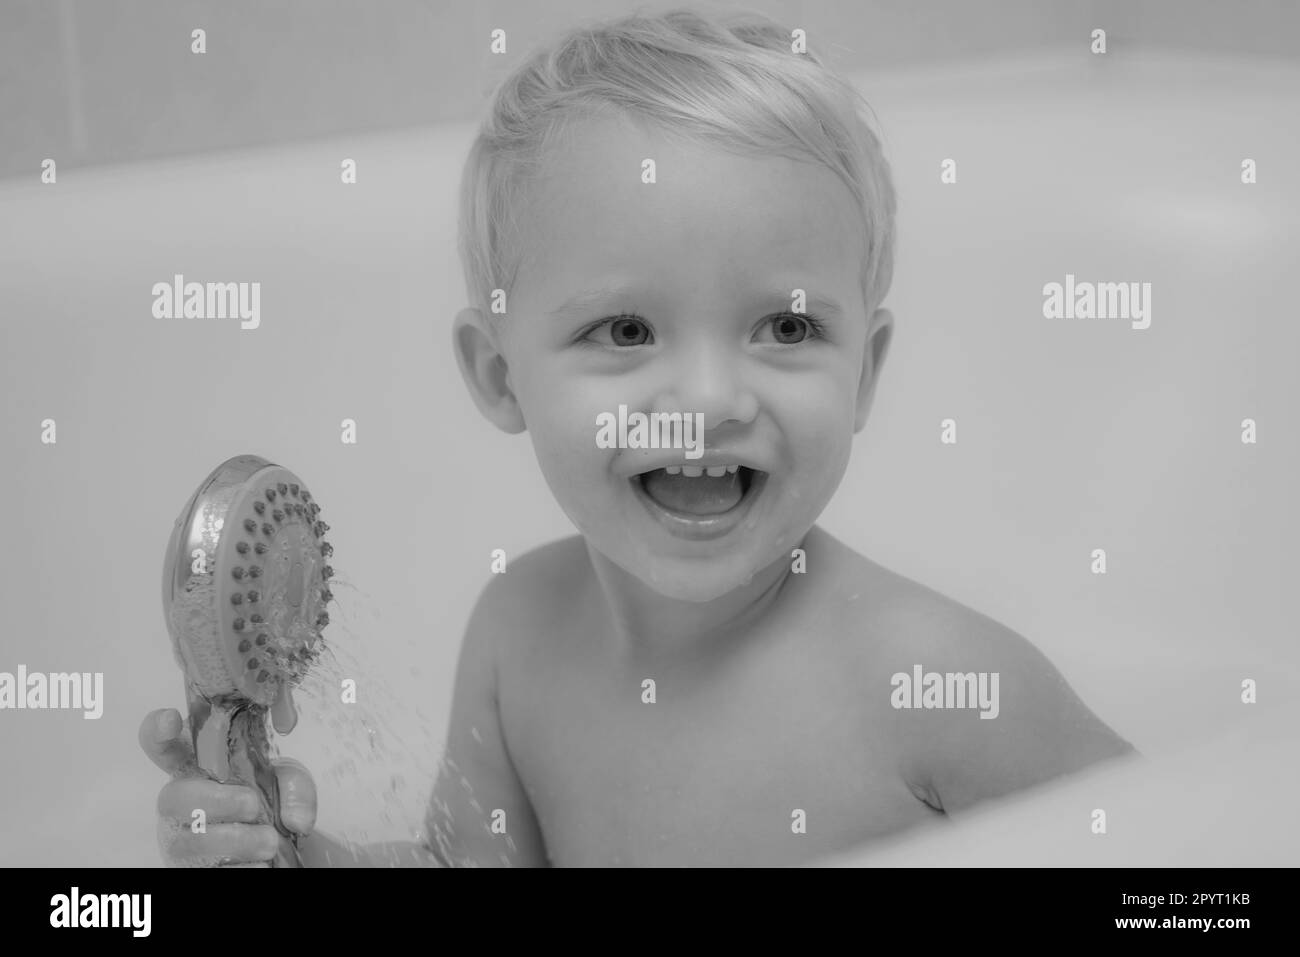 Child bubble bath. Pretty smiling little boy taking a bath with soap ...